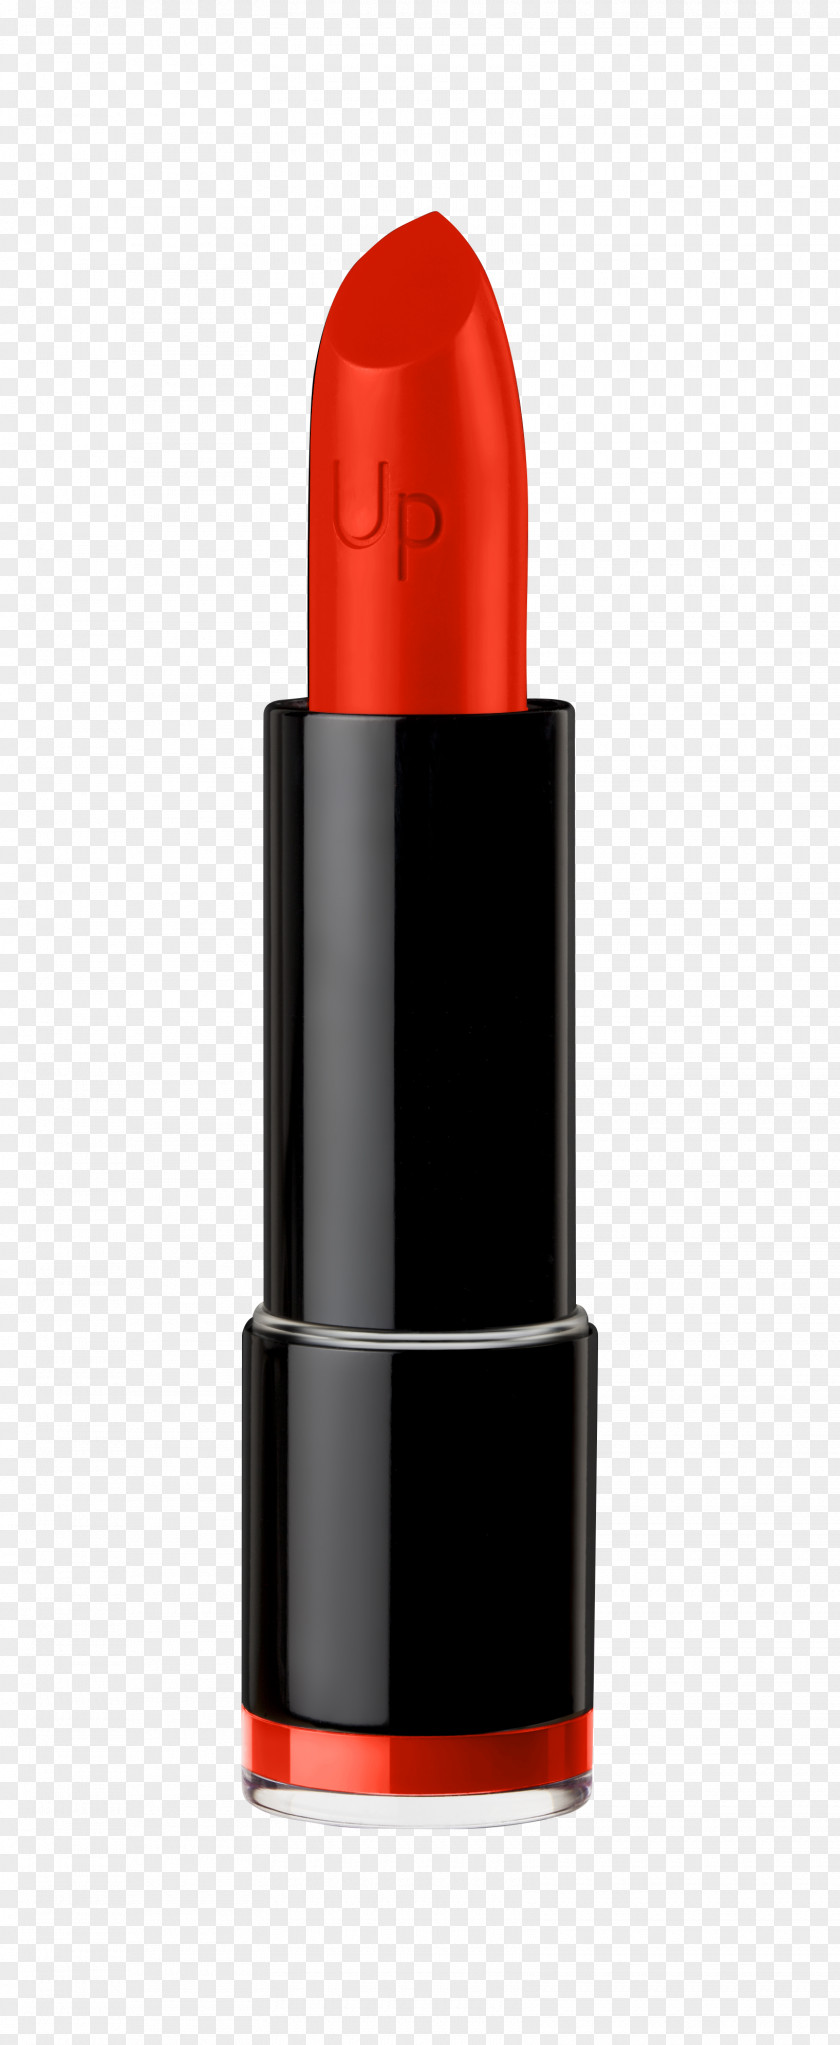 Lipstick Transparent Picture Red Make-up Black|Up PNG